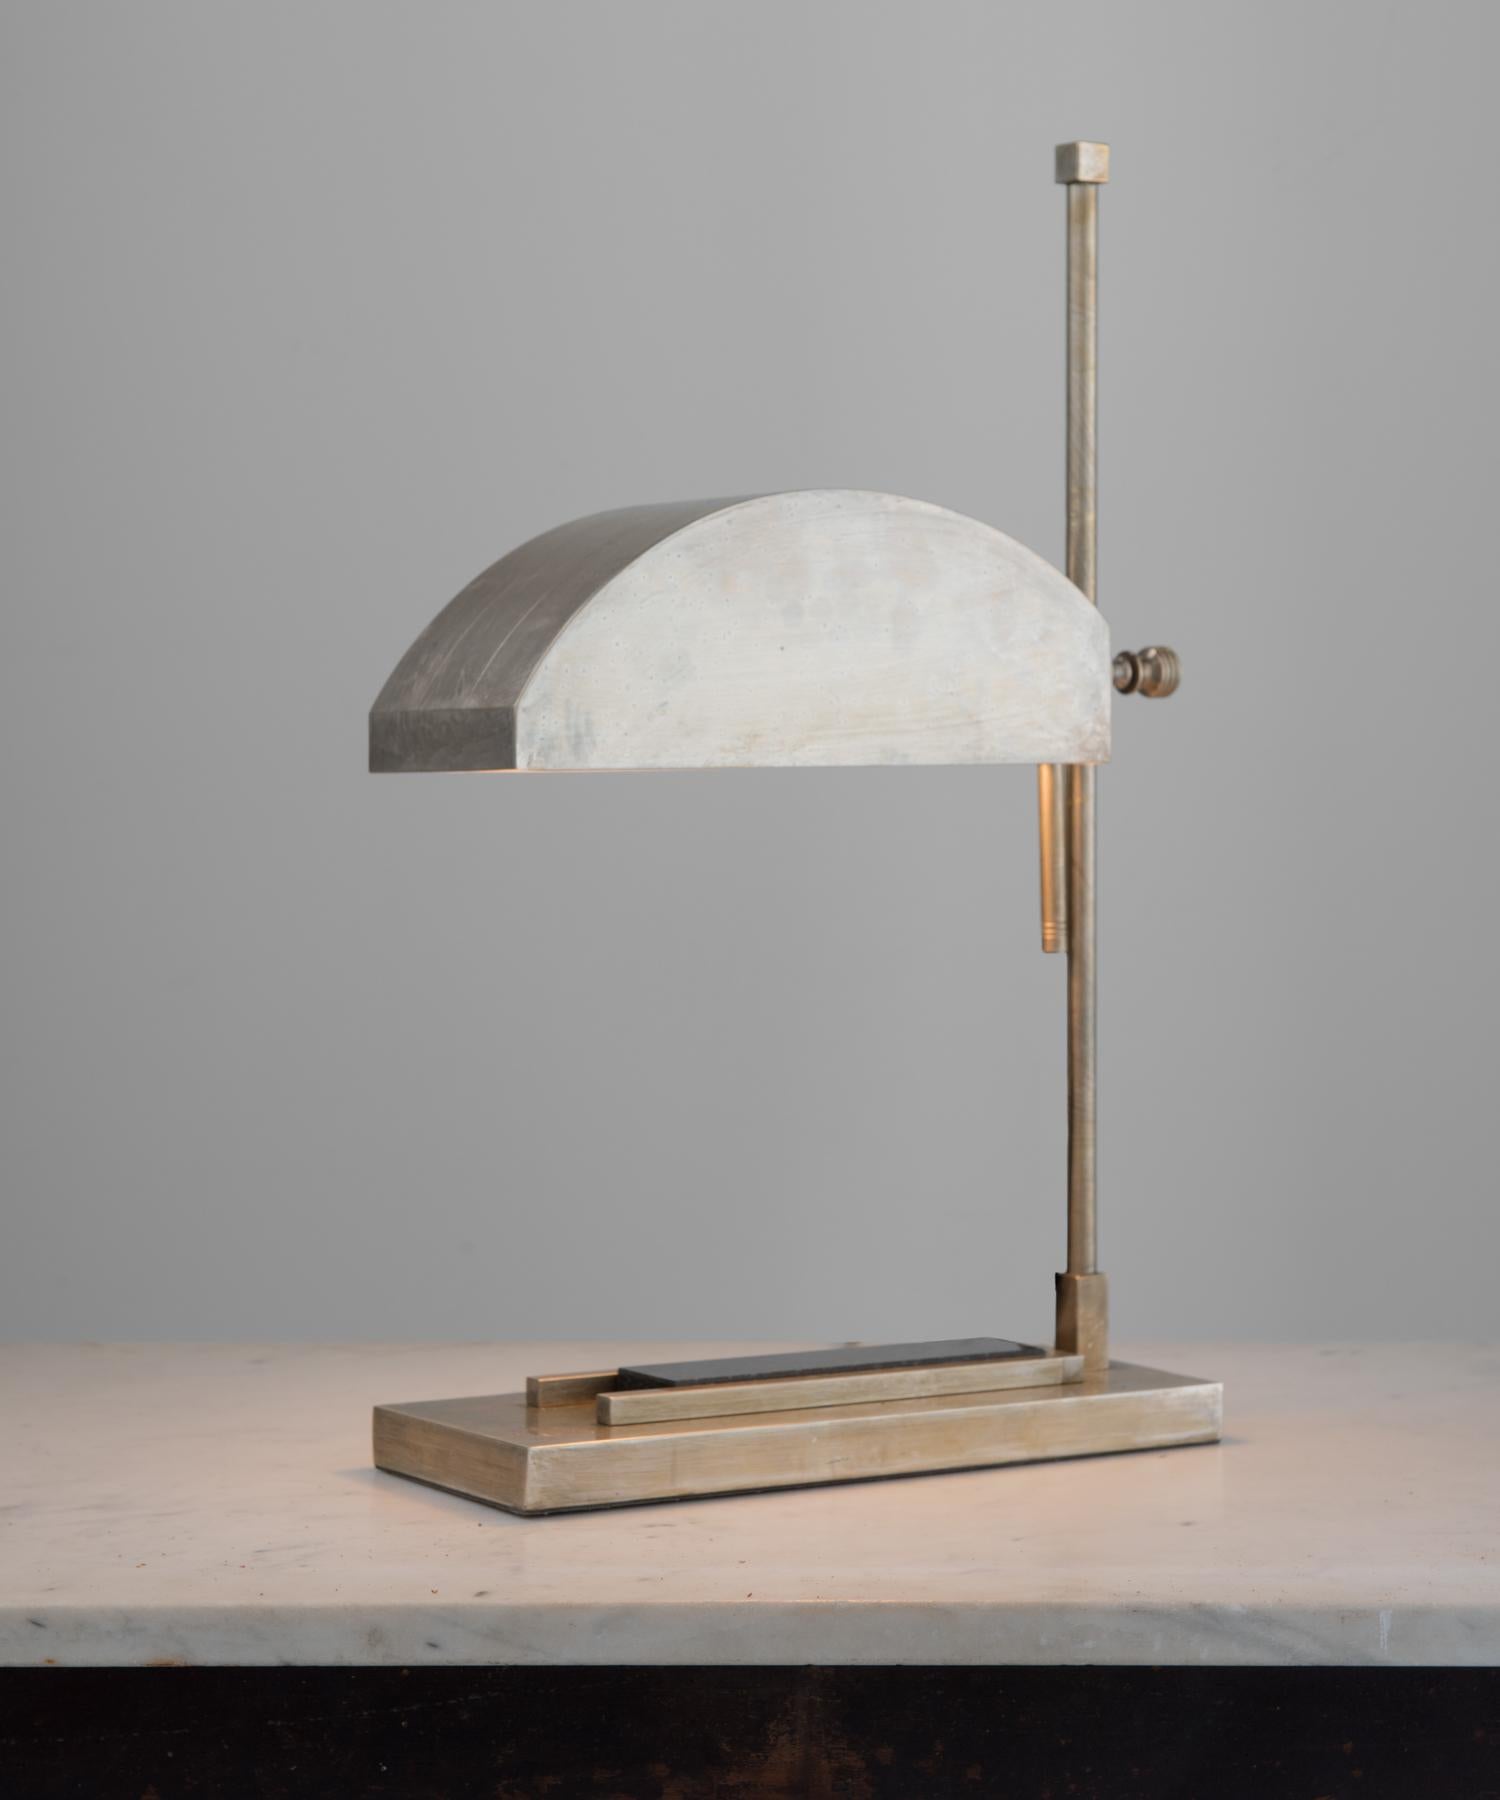 Plated Marcel Breuer Desk Lamp, Germany, circa 1925